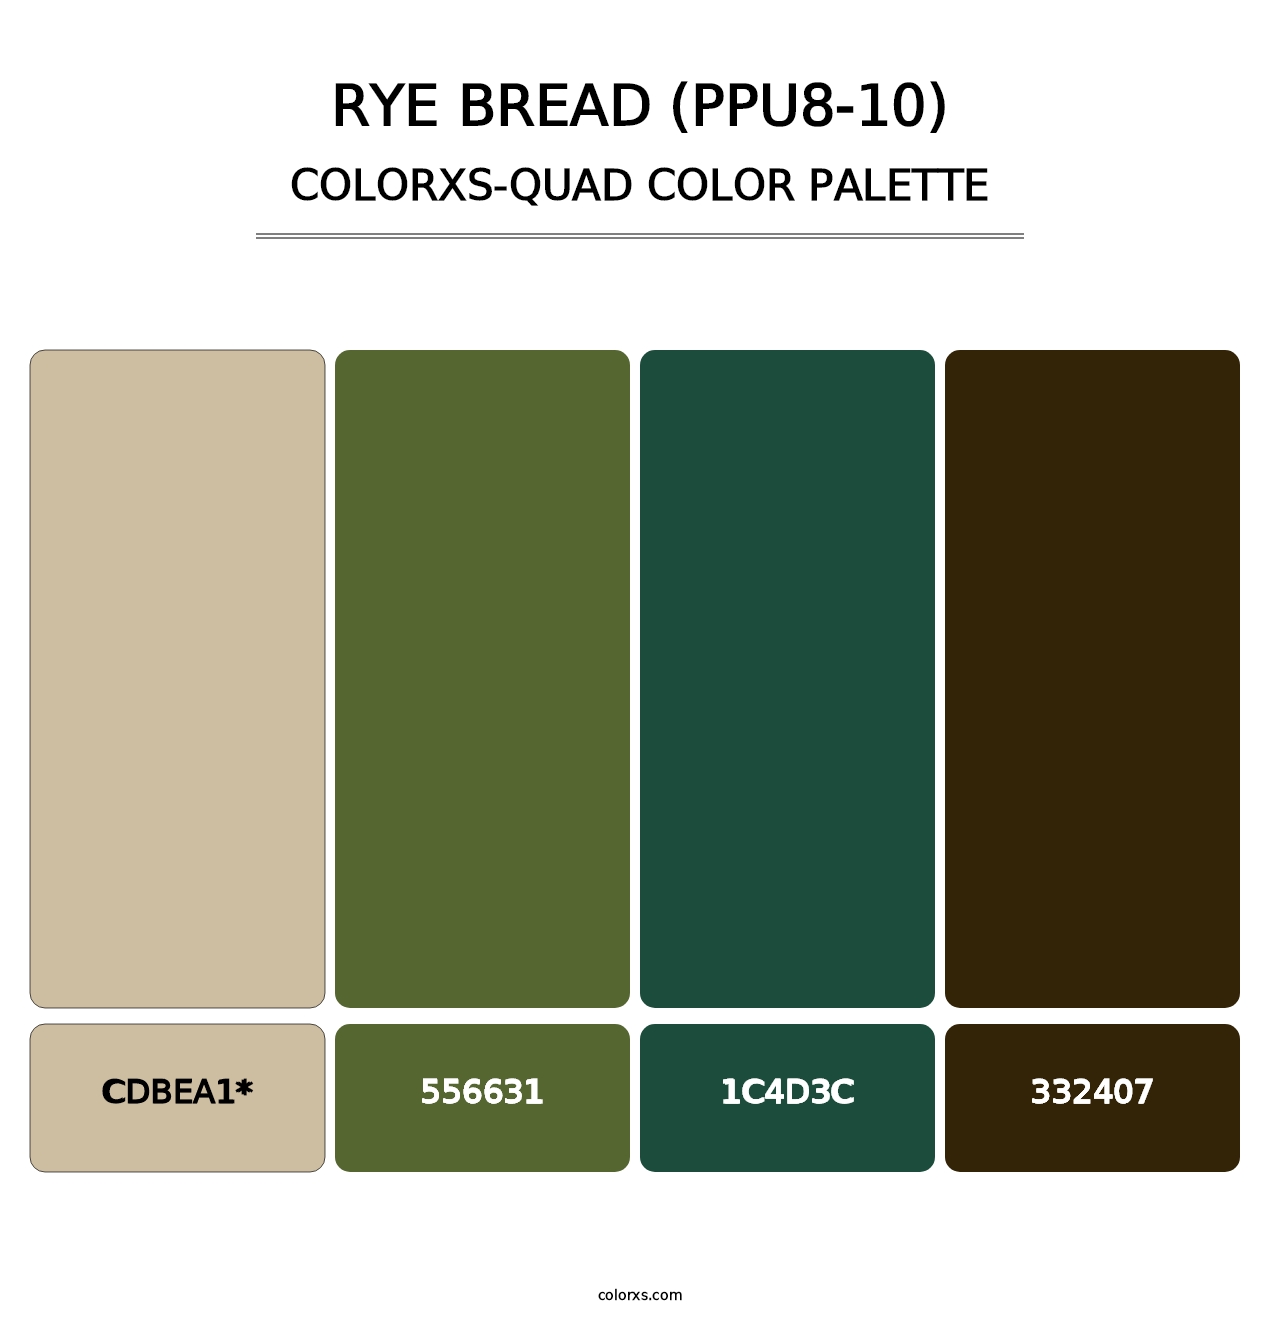 Rye Bread (PPU8-10) - Colorxs Quad Palette